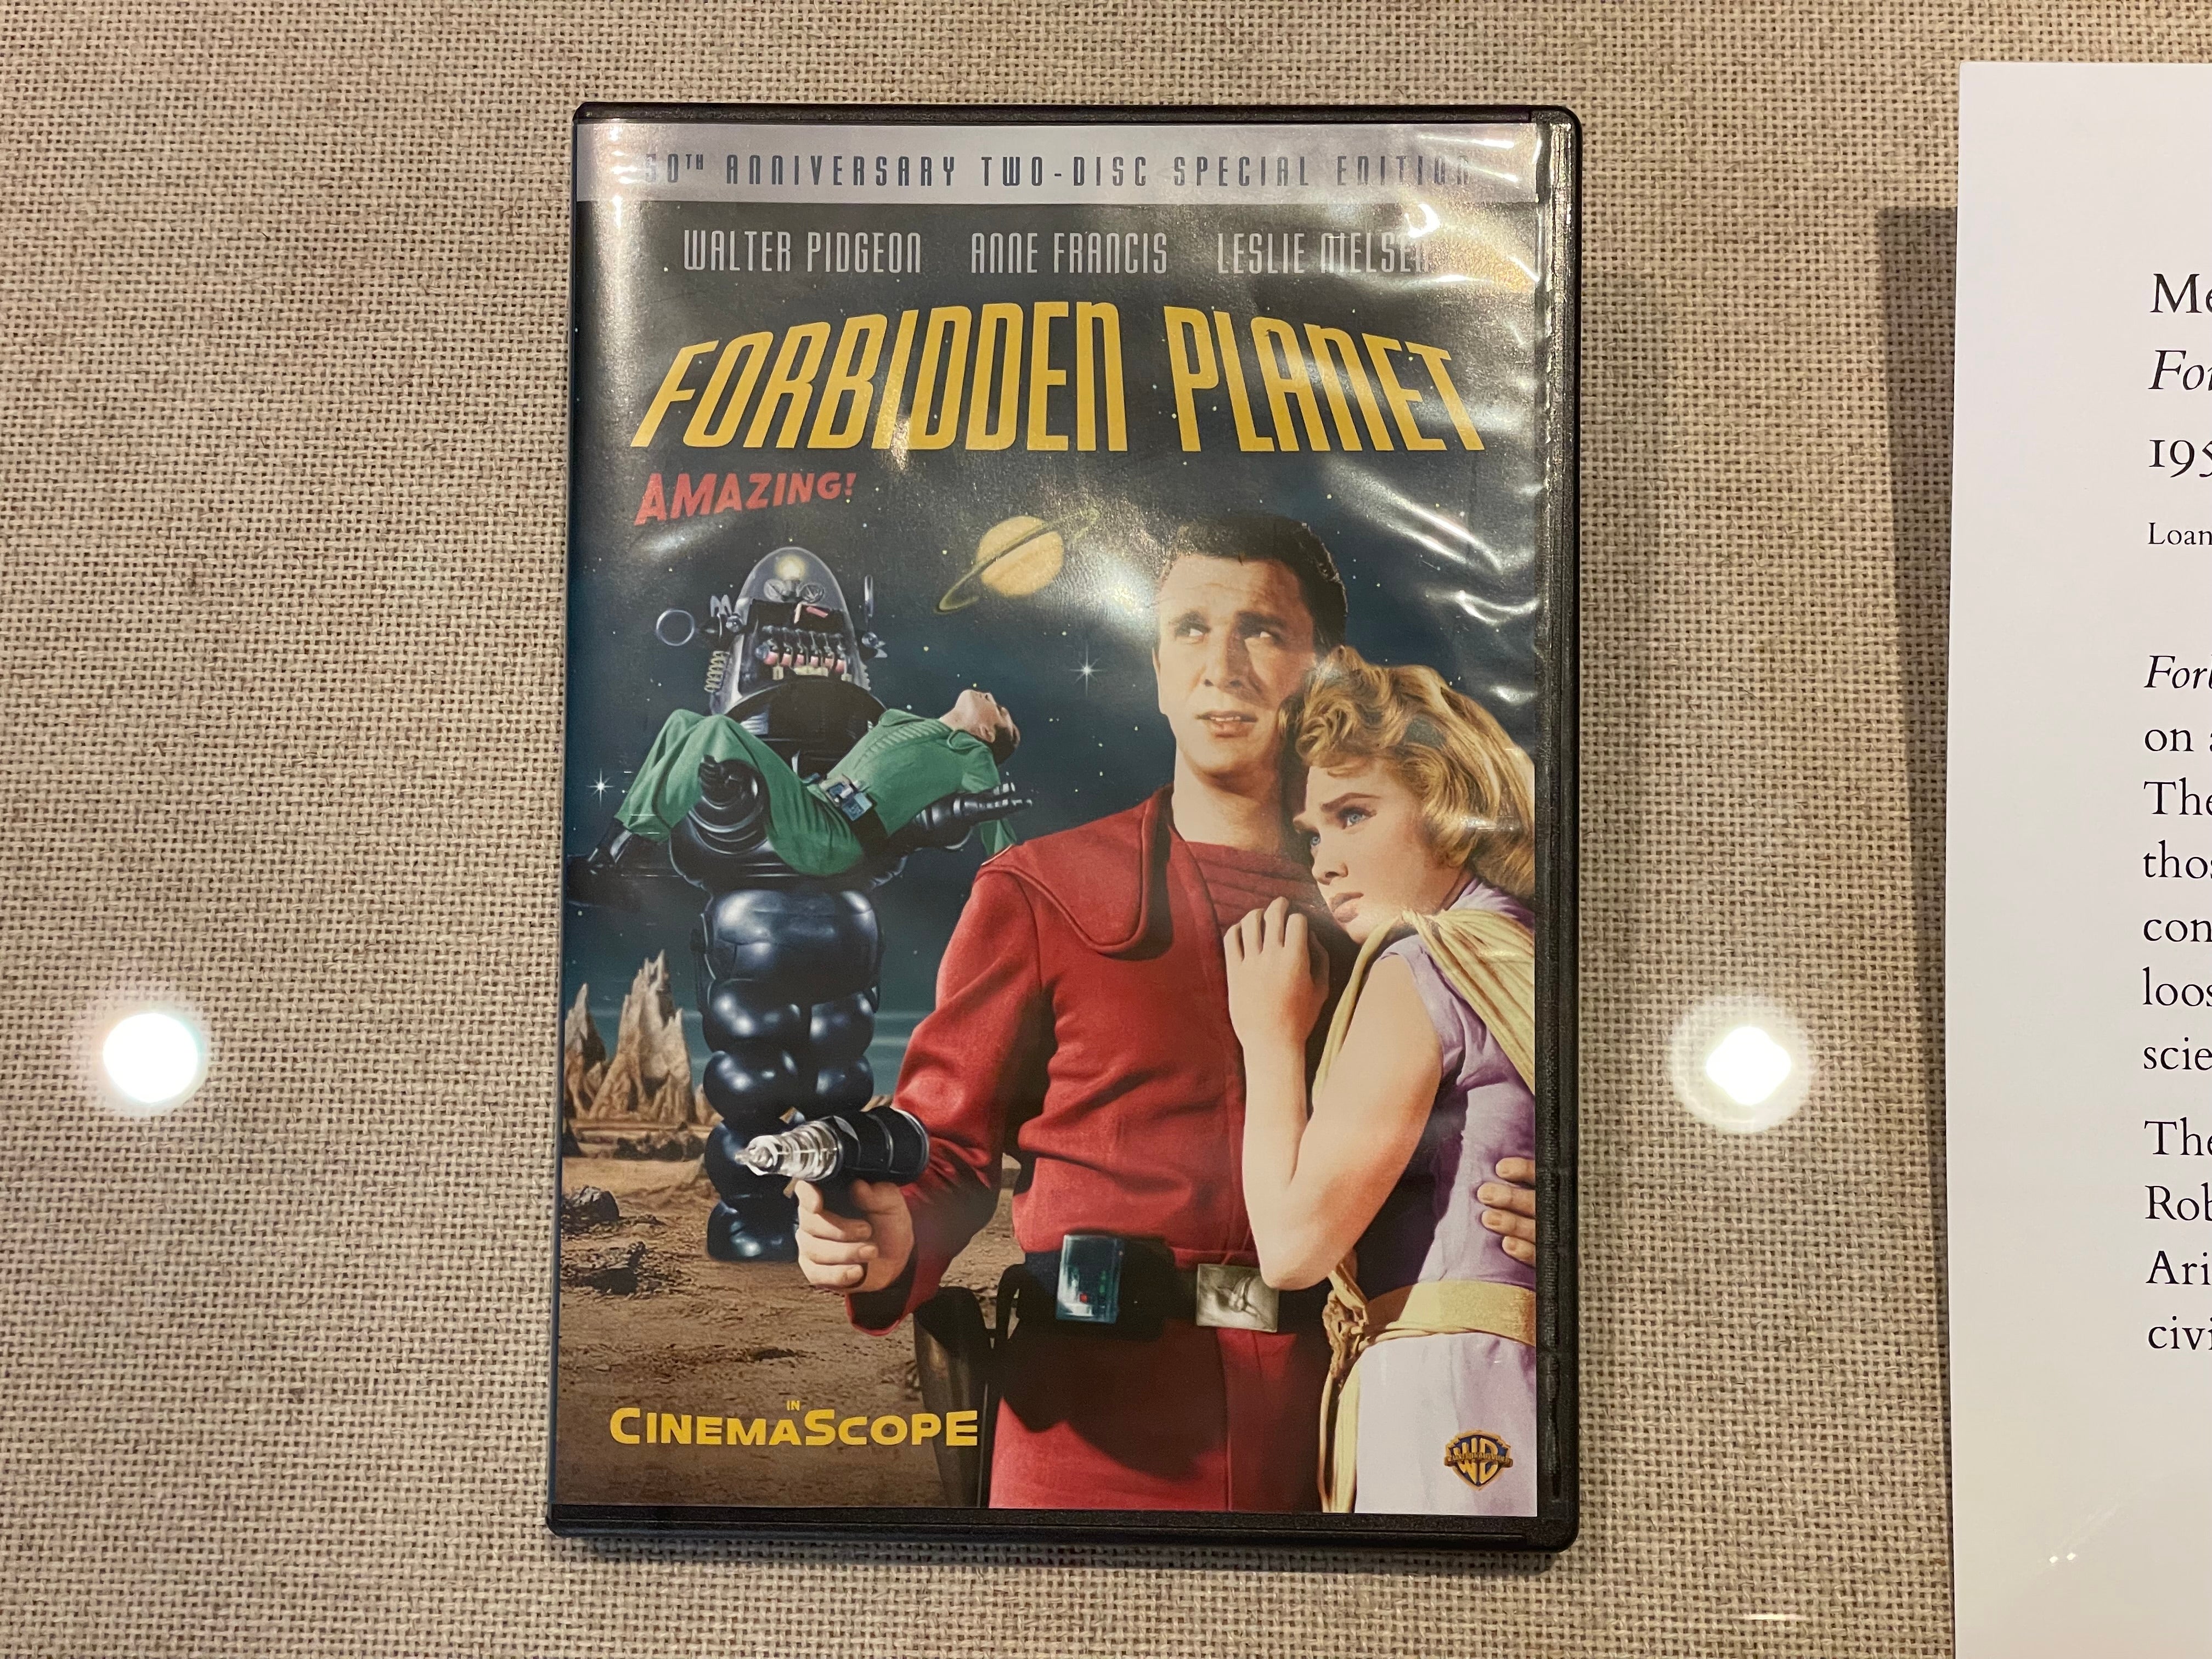 Photo of Forbidden Planet DVD case